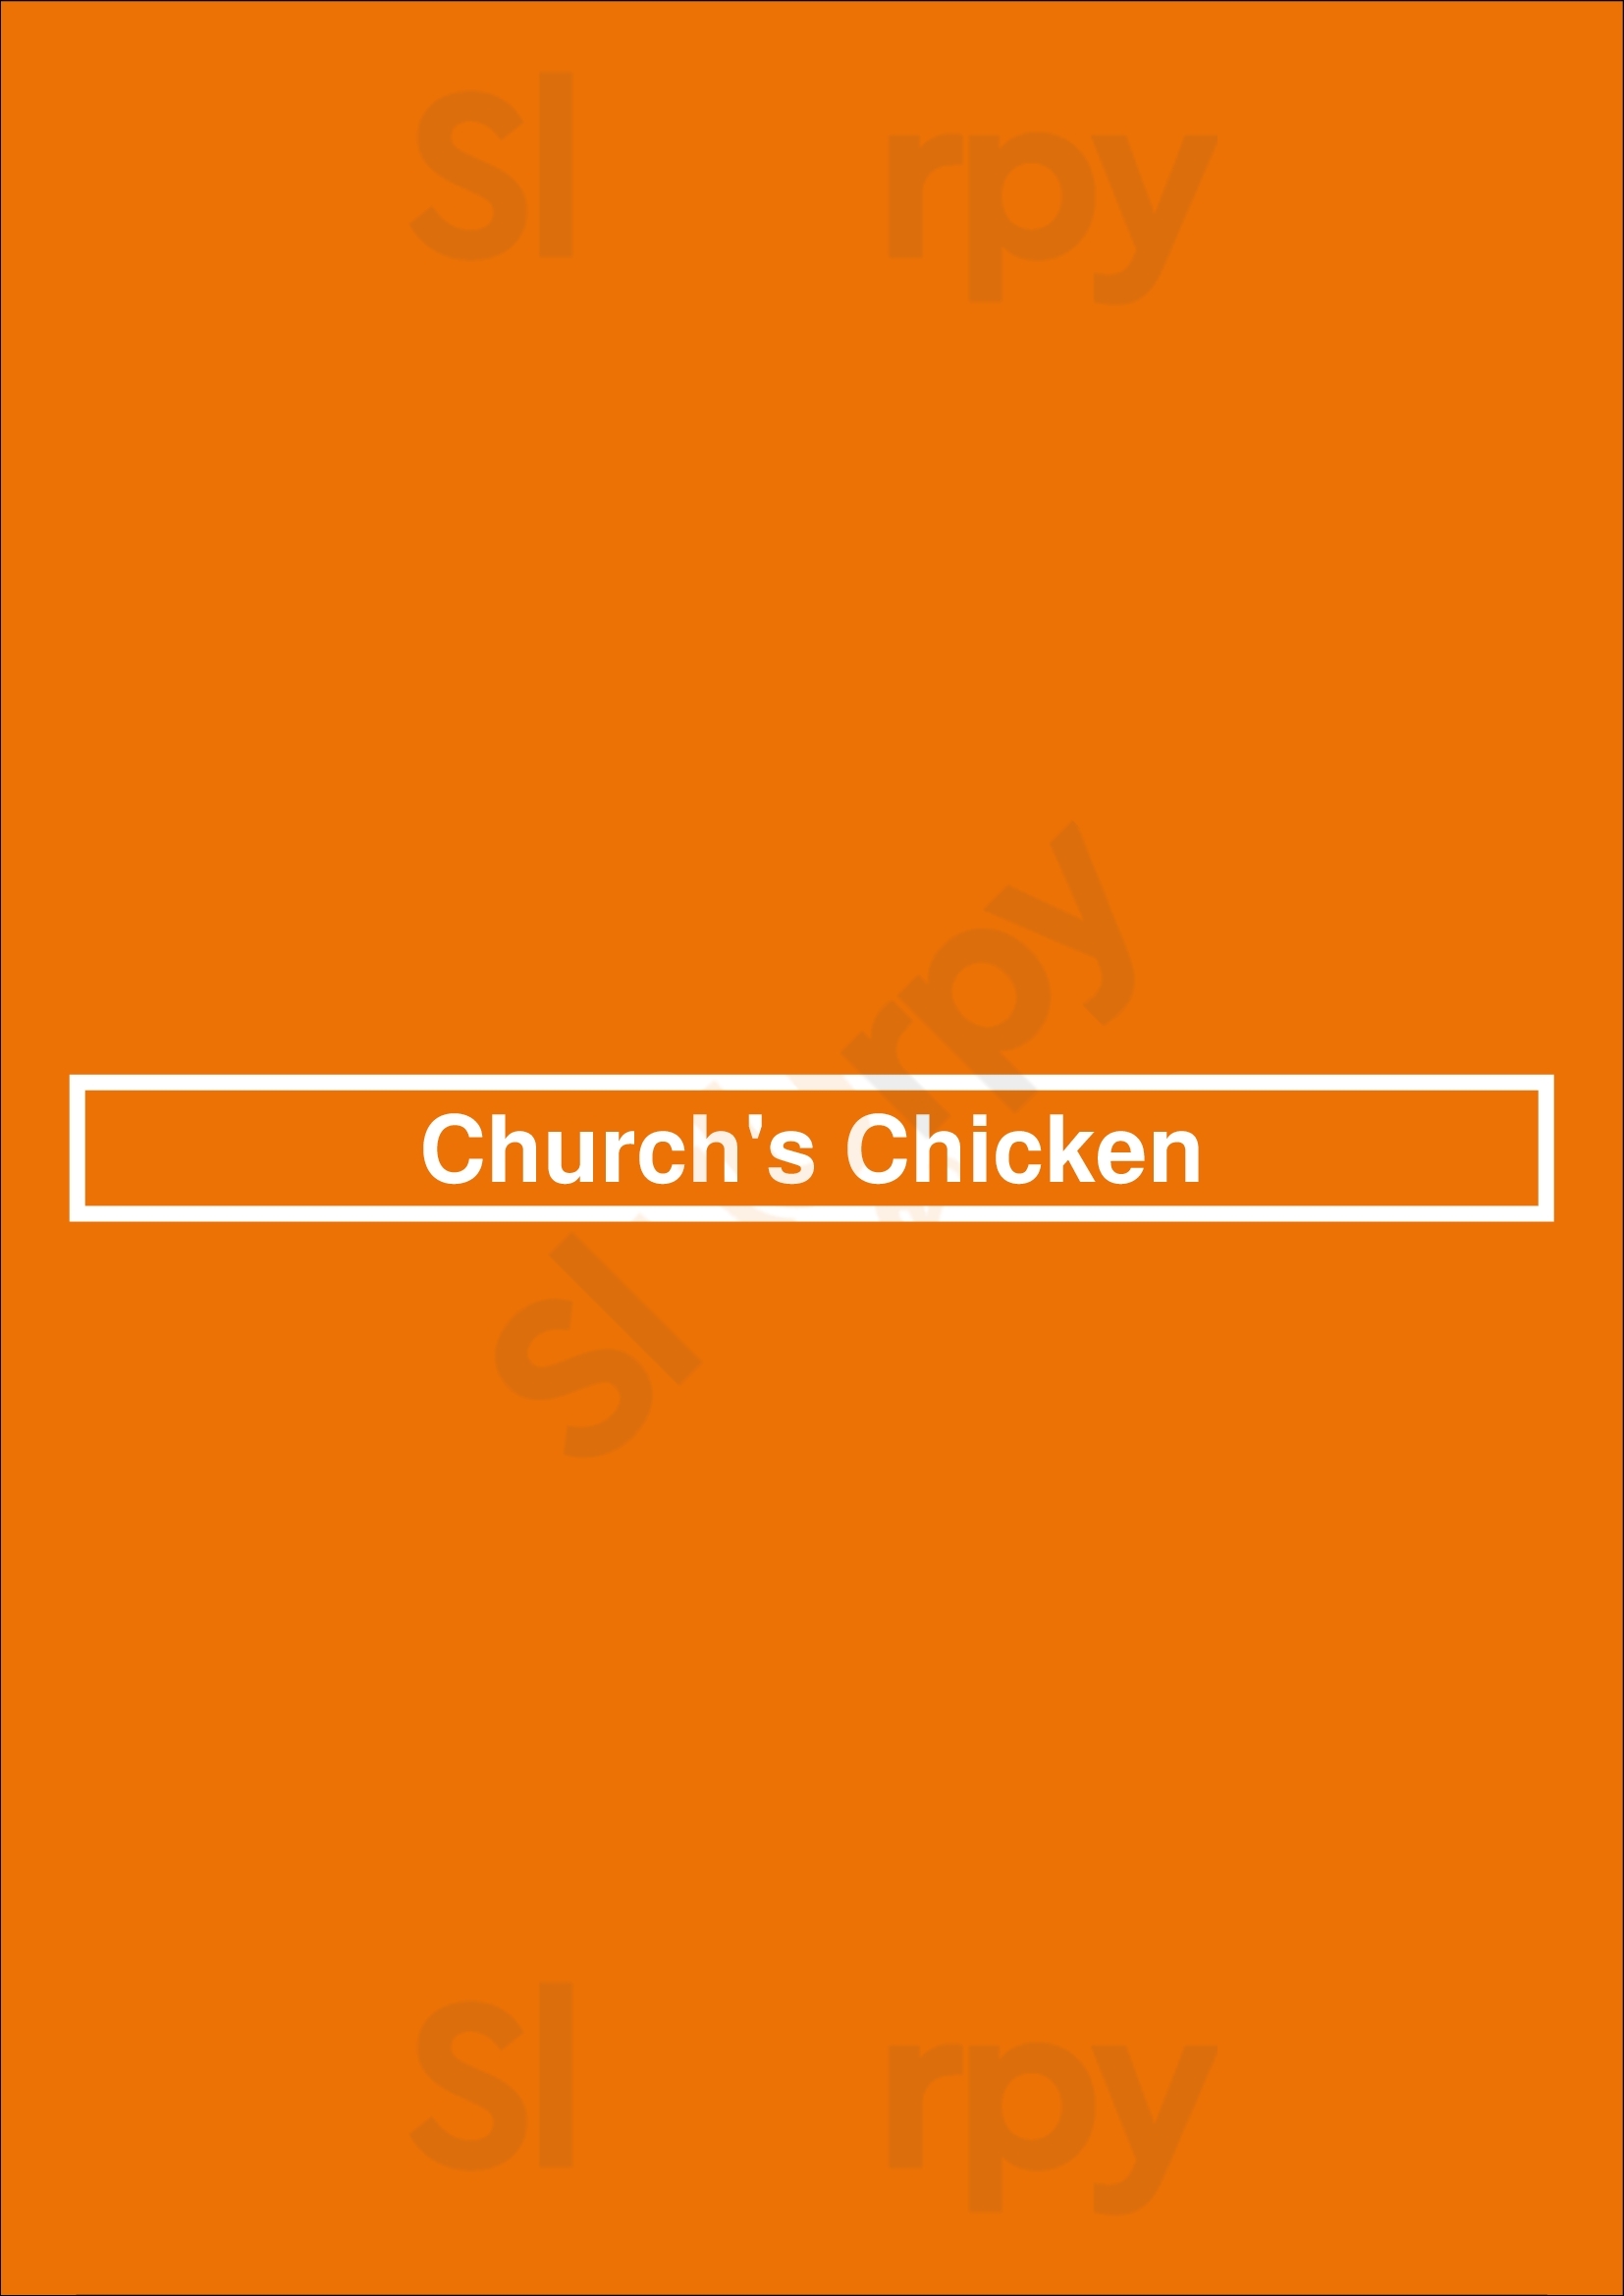 Church's Texas Chicken Houston Menu - 1